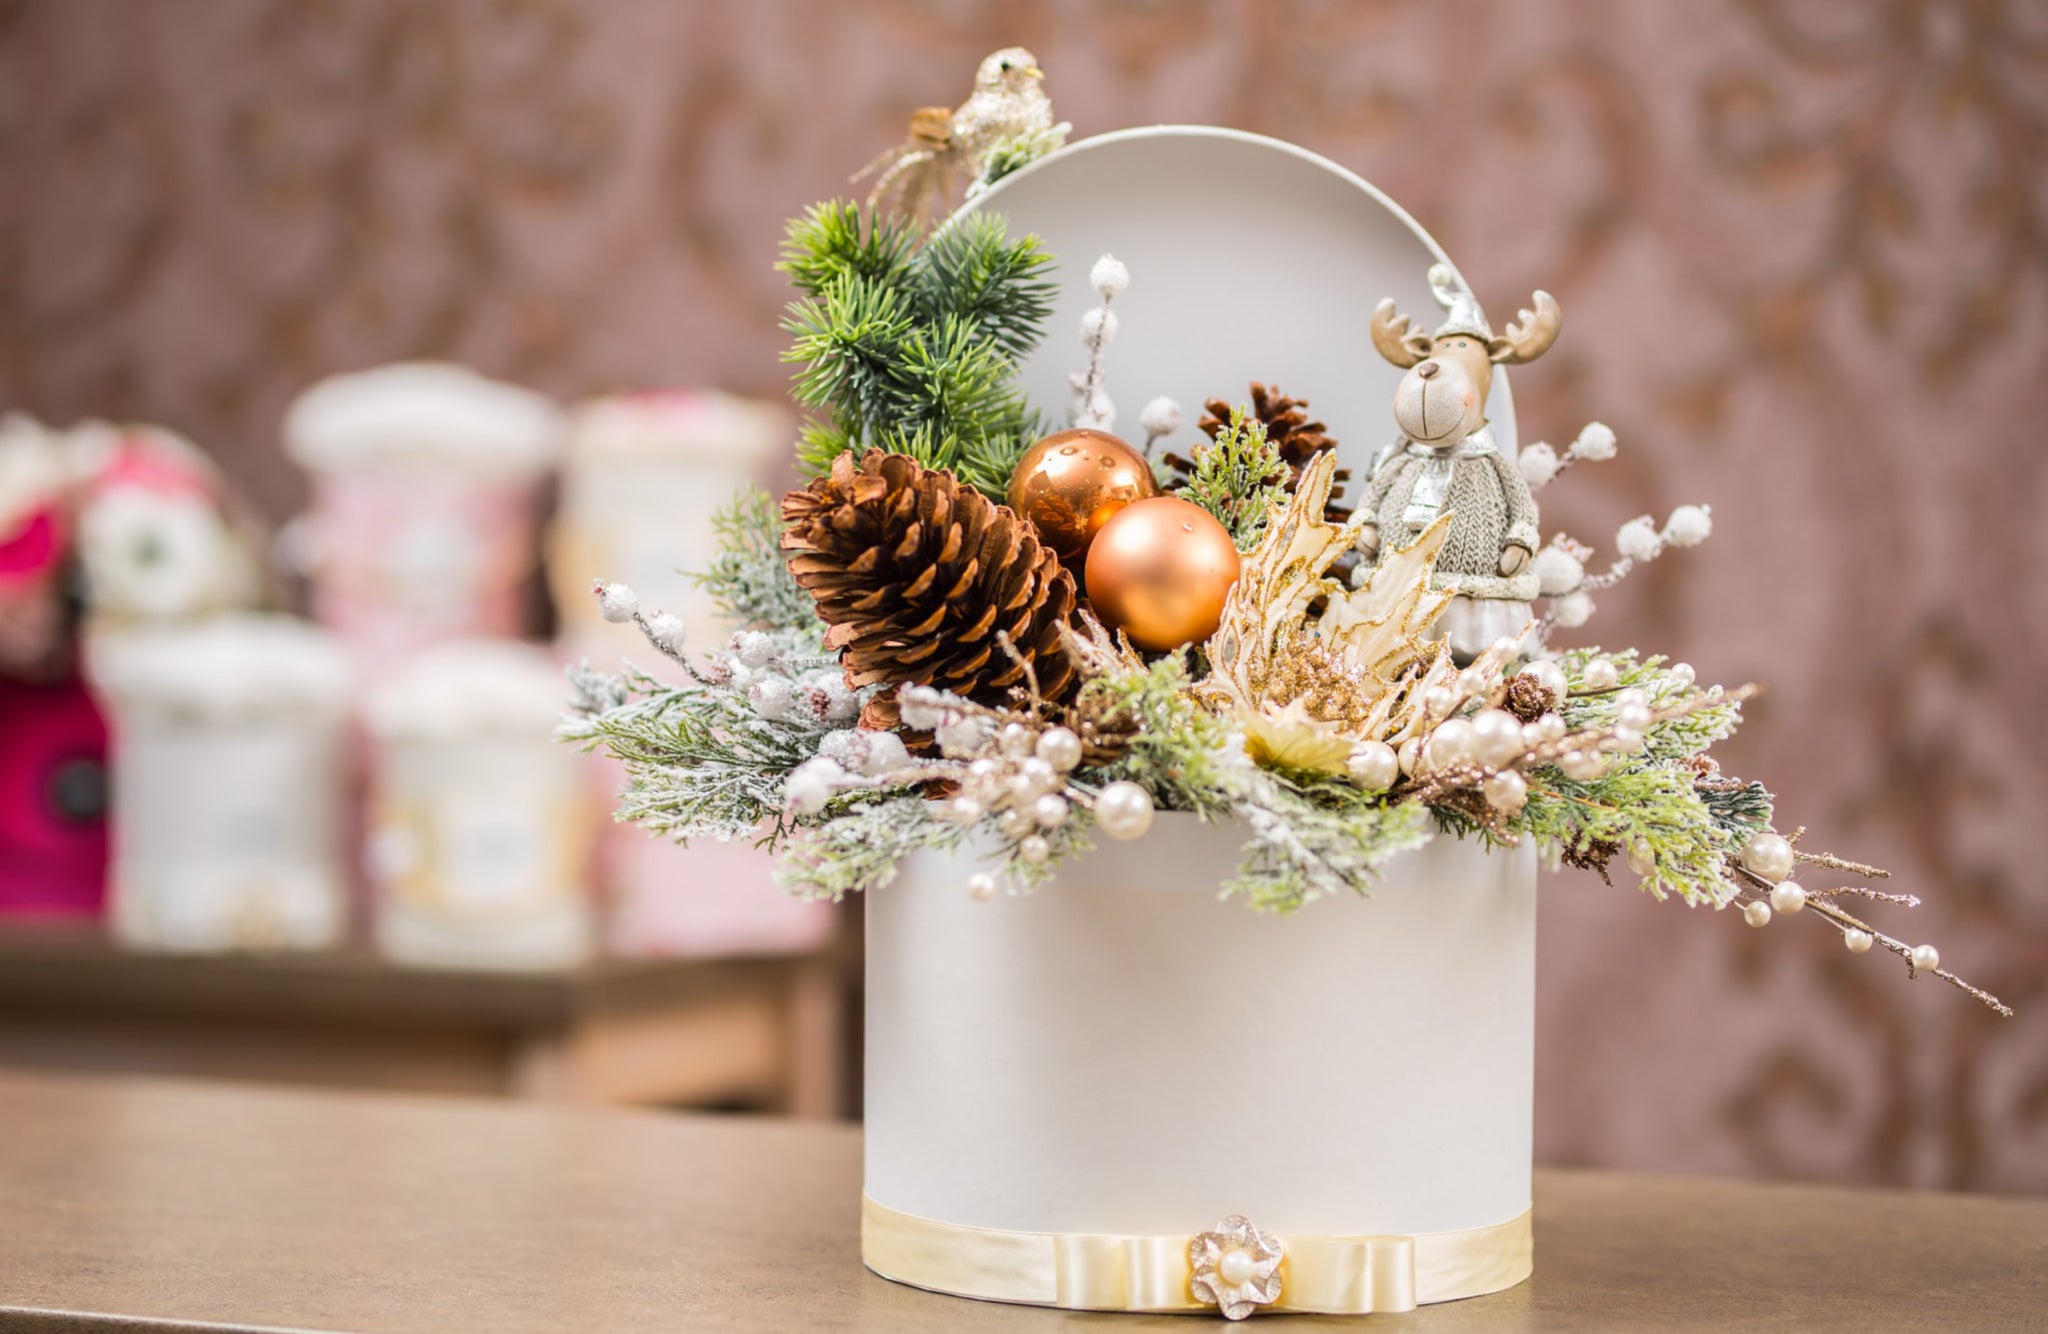 Seasonal Flower Gift Box Ideas